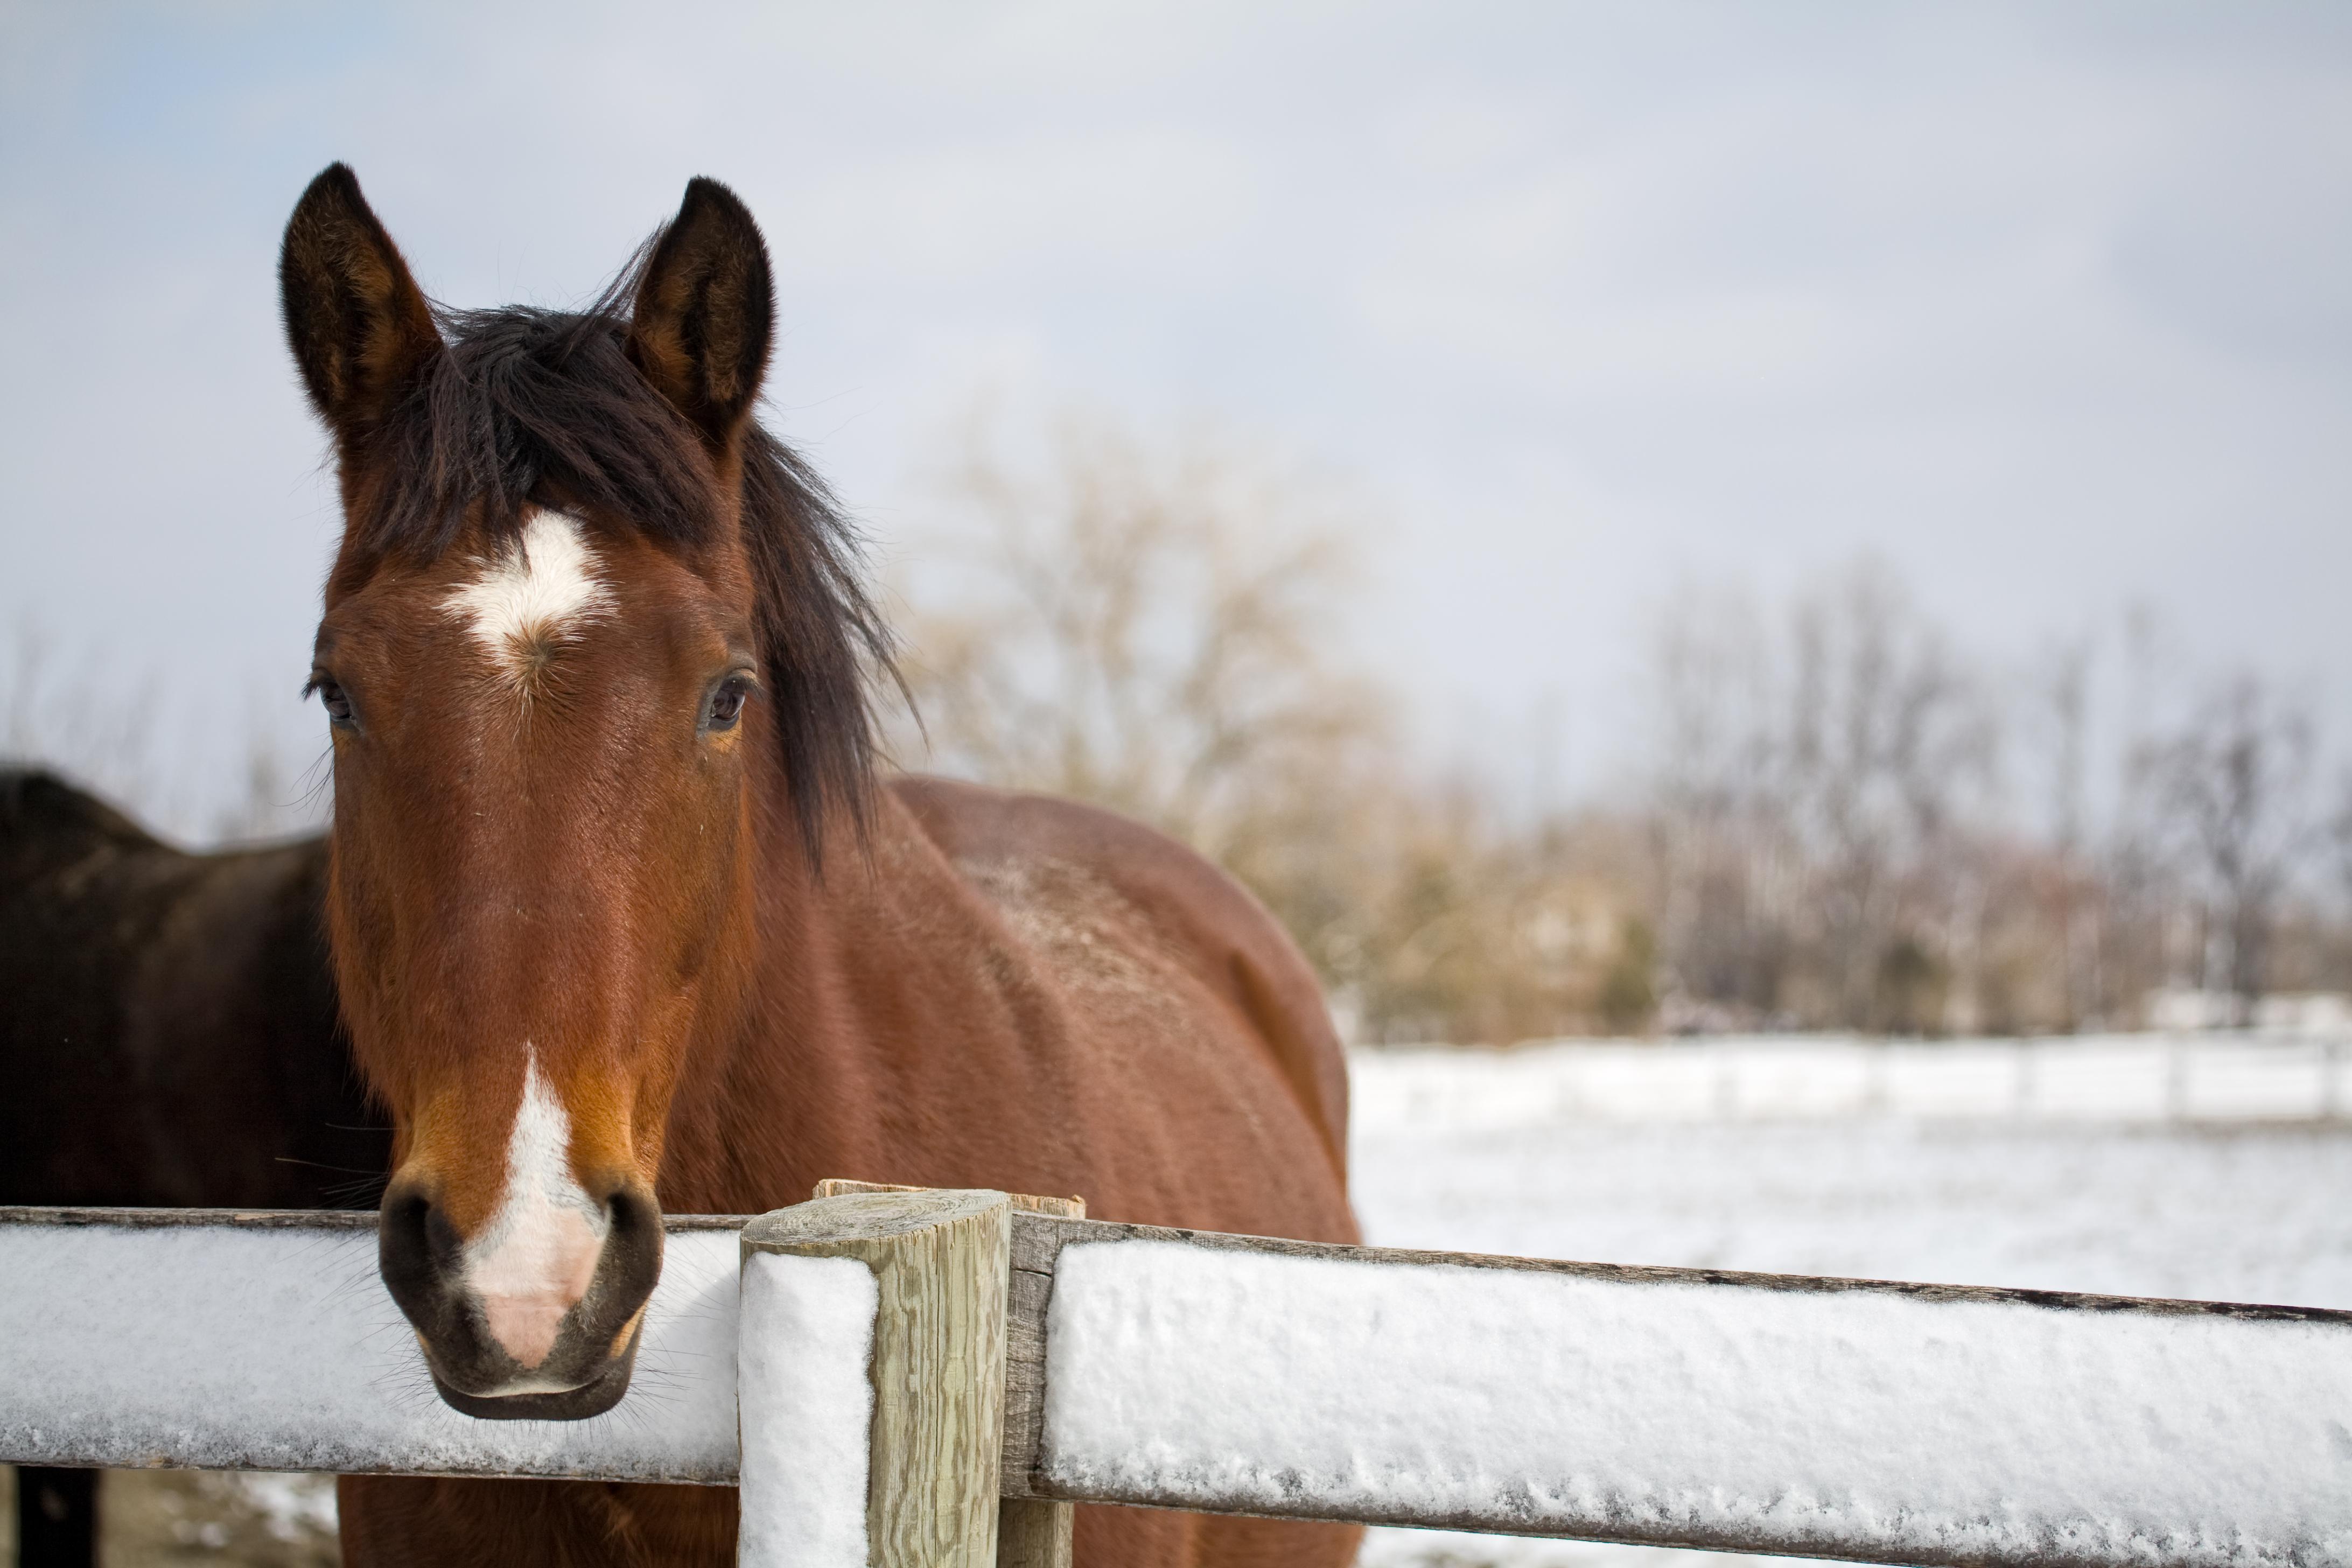 Horse, winter, snow, fence